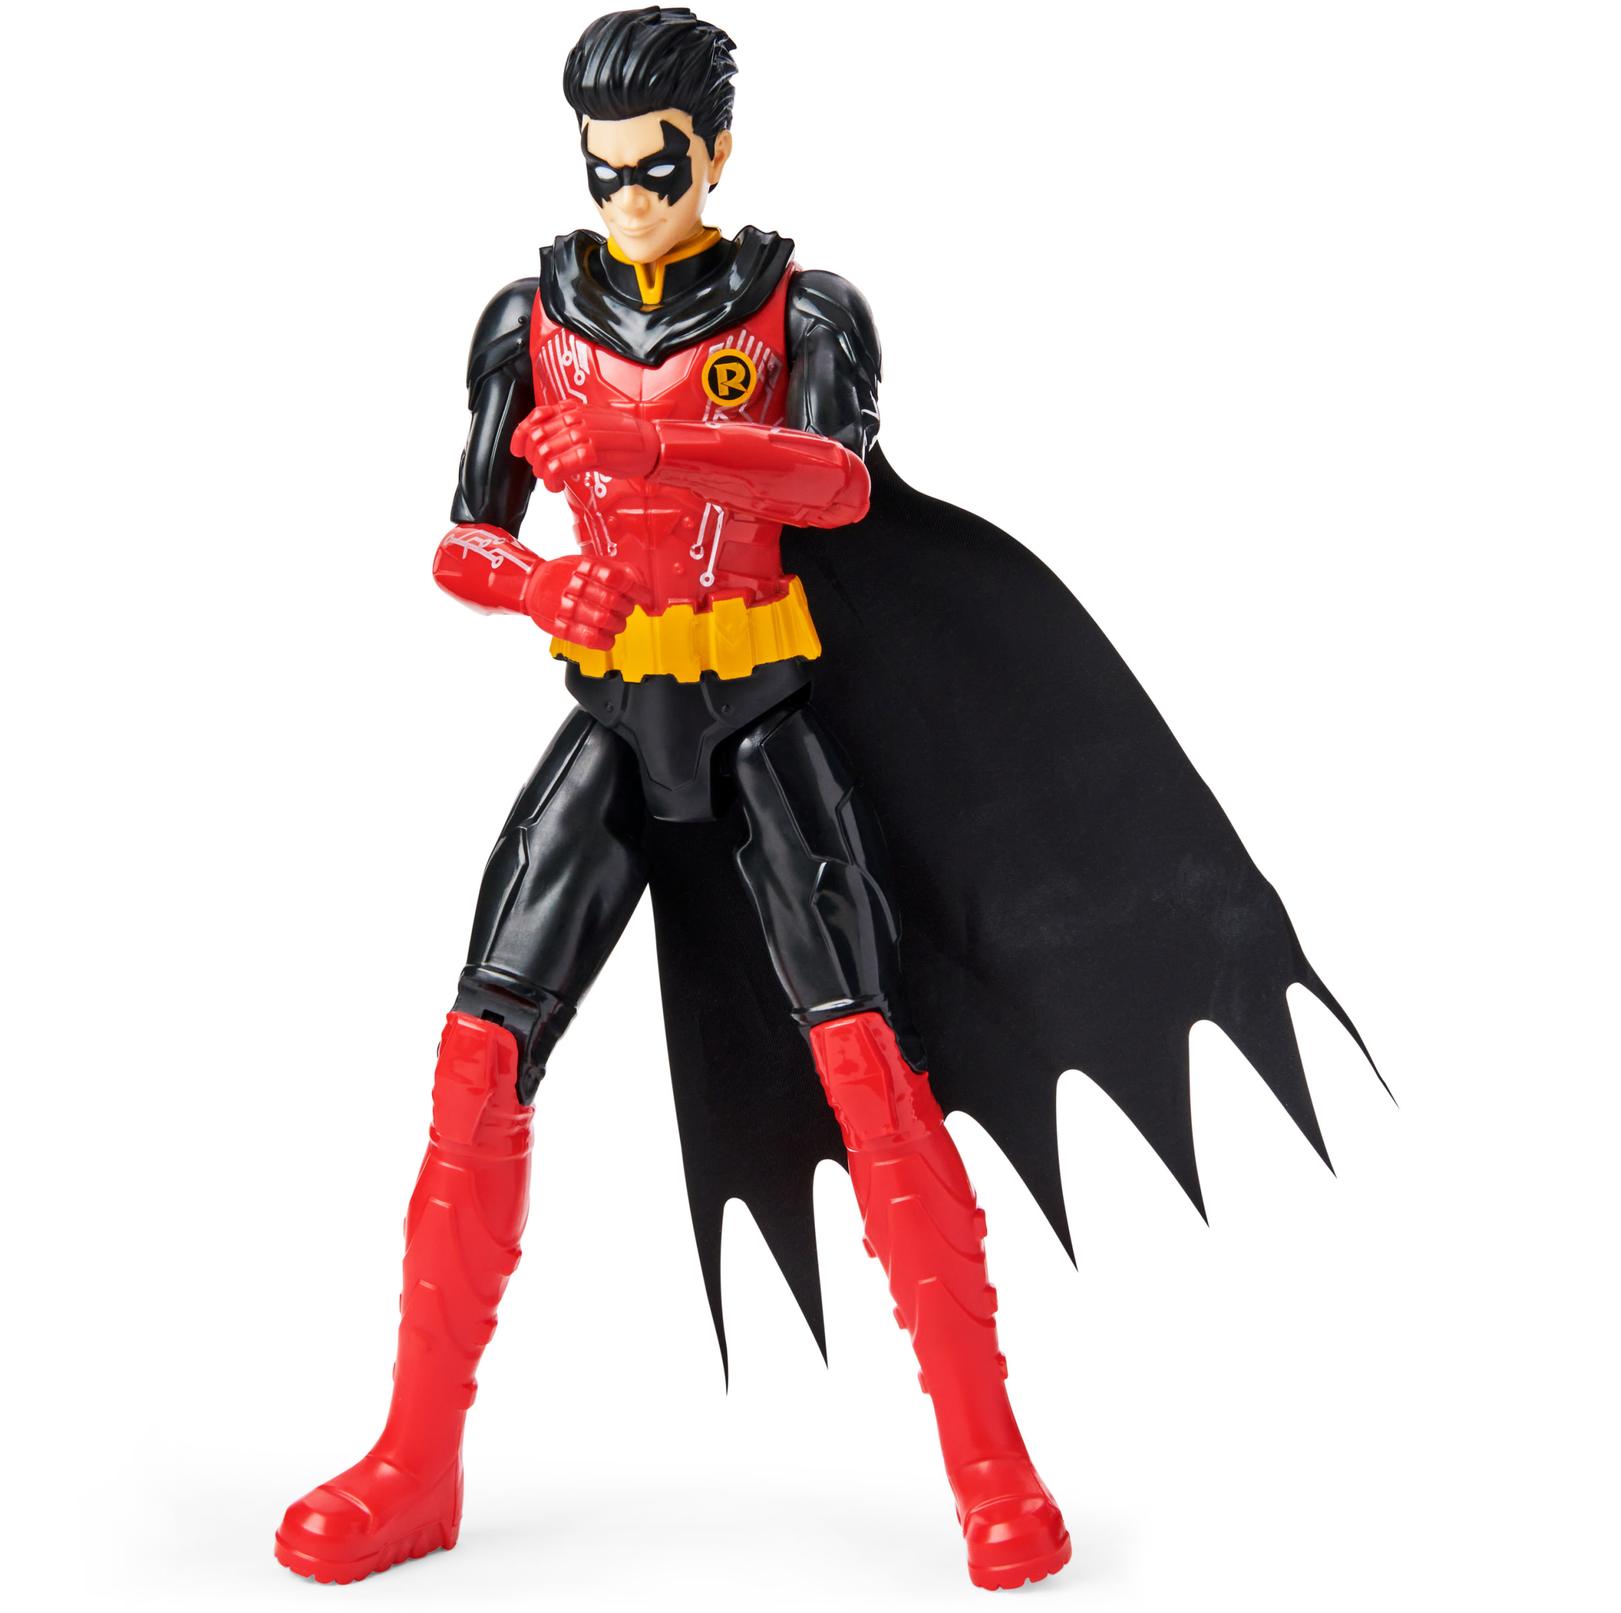 Oferta de Batman figura de 30 cm... por 13,95€ en Jugueterías Nikki